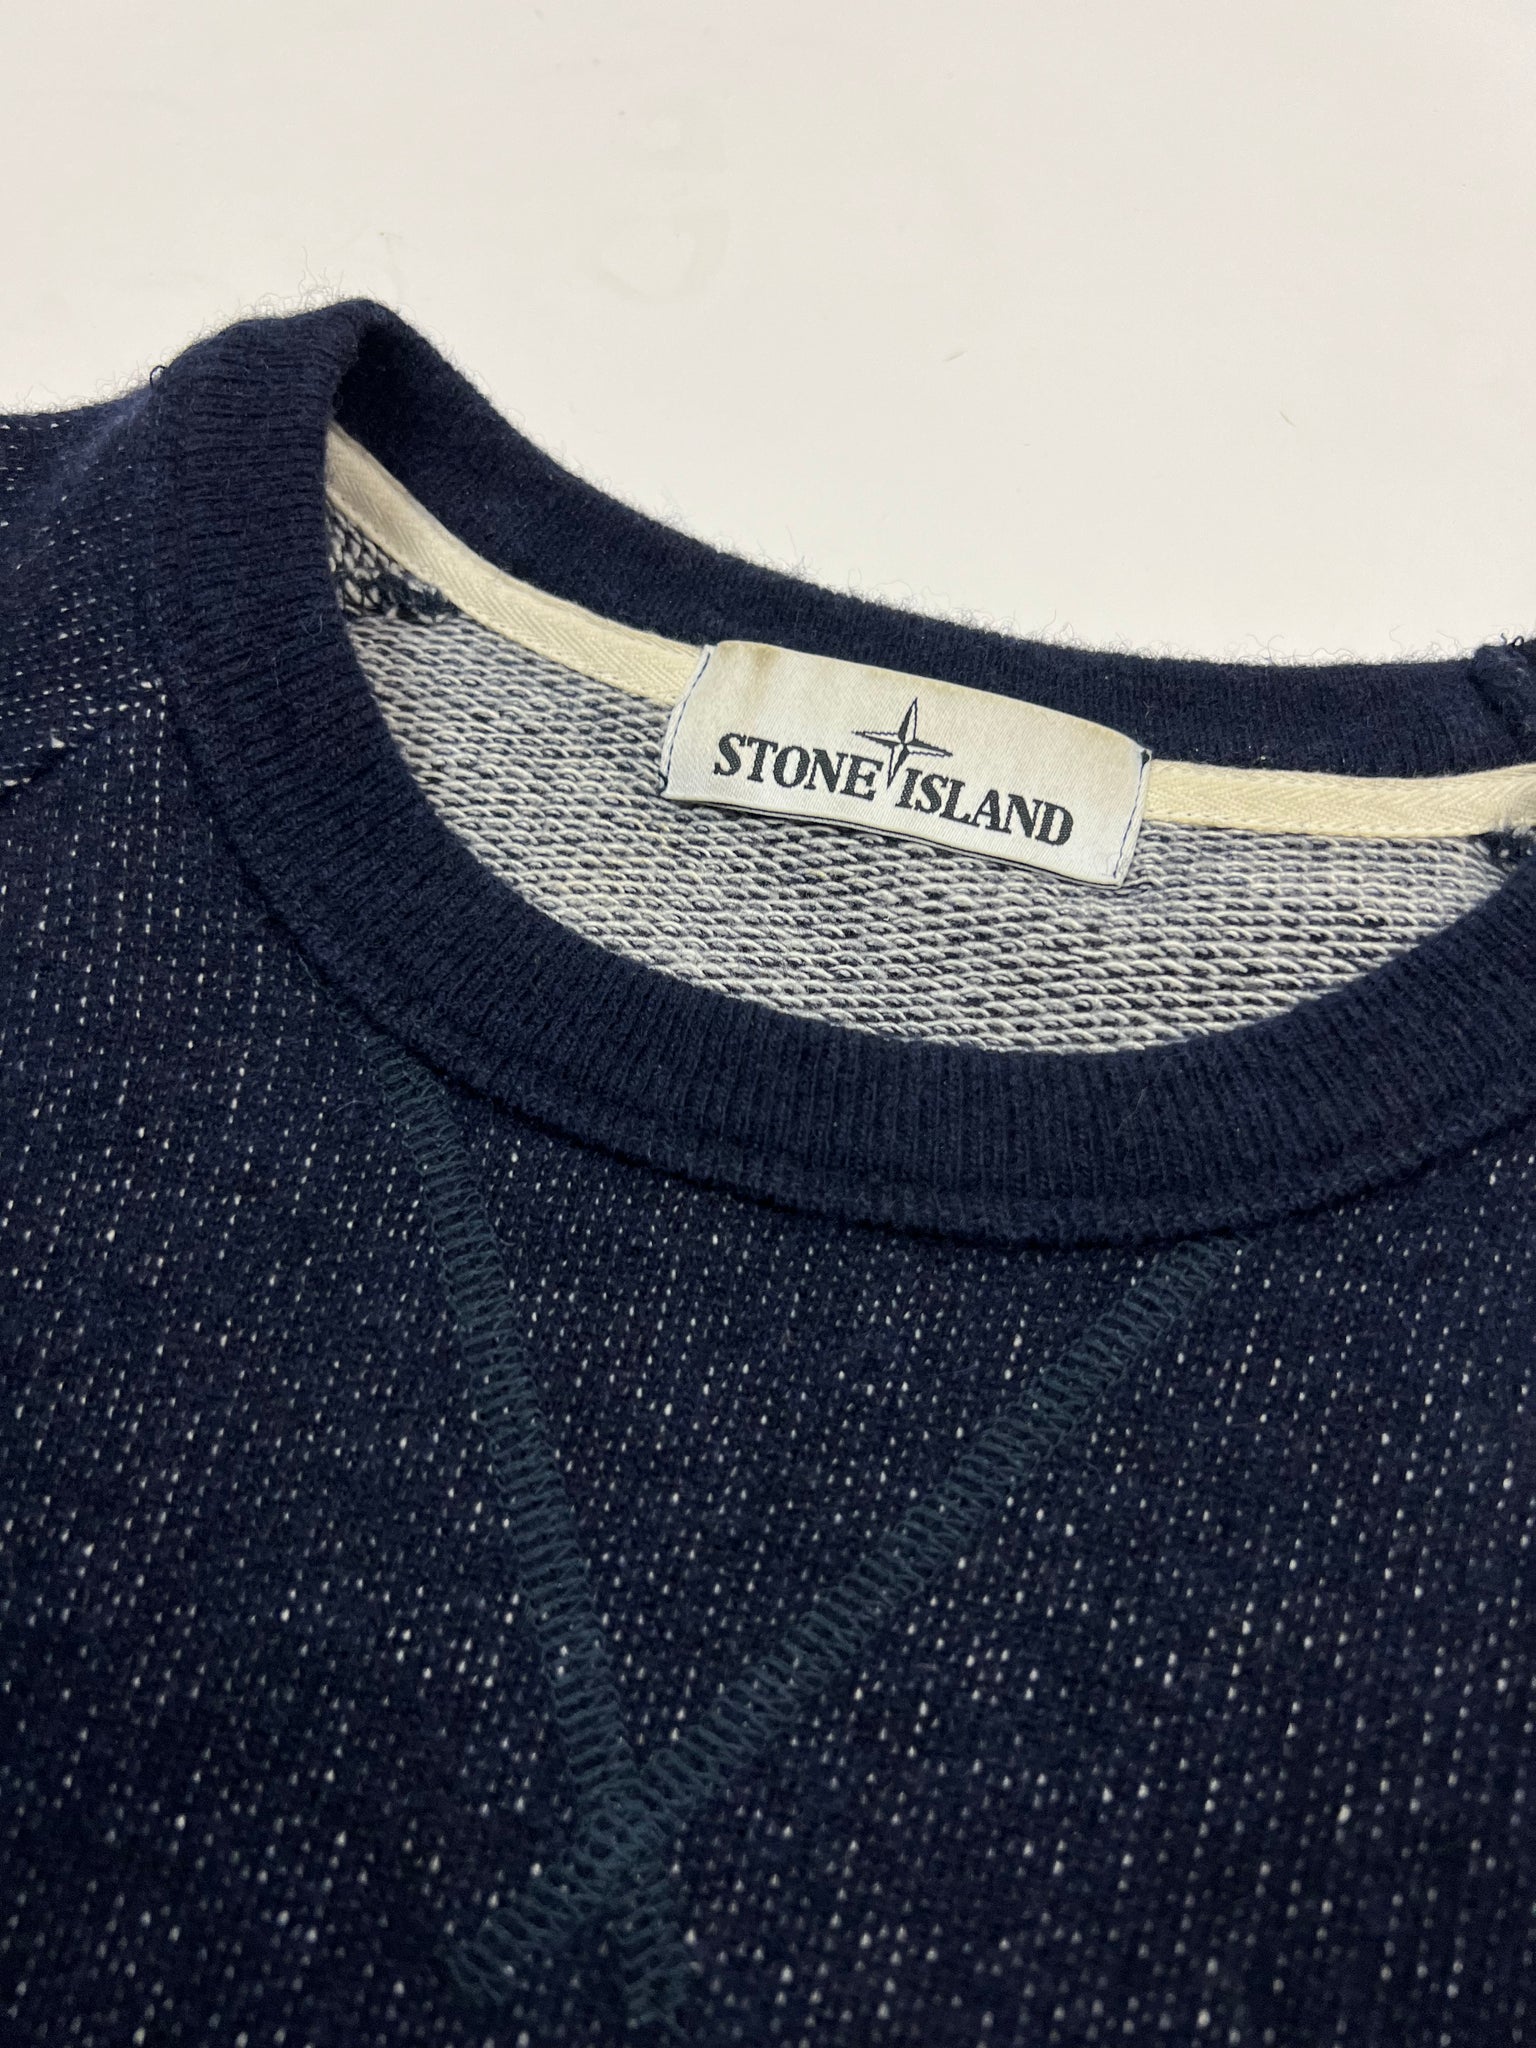 Stone Island Sweater (M)